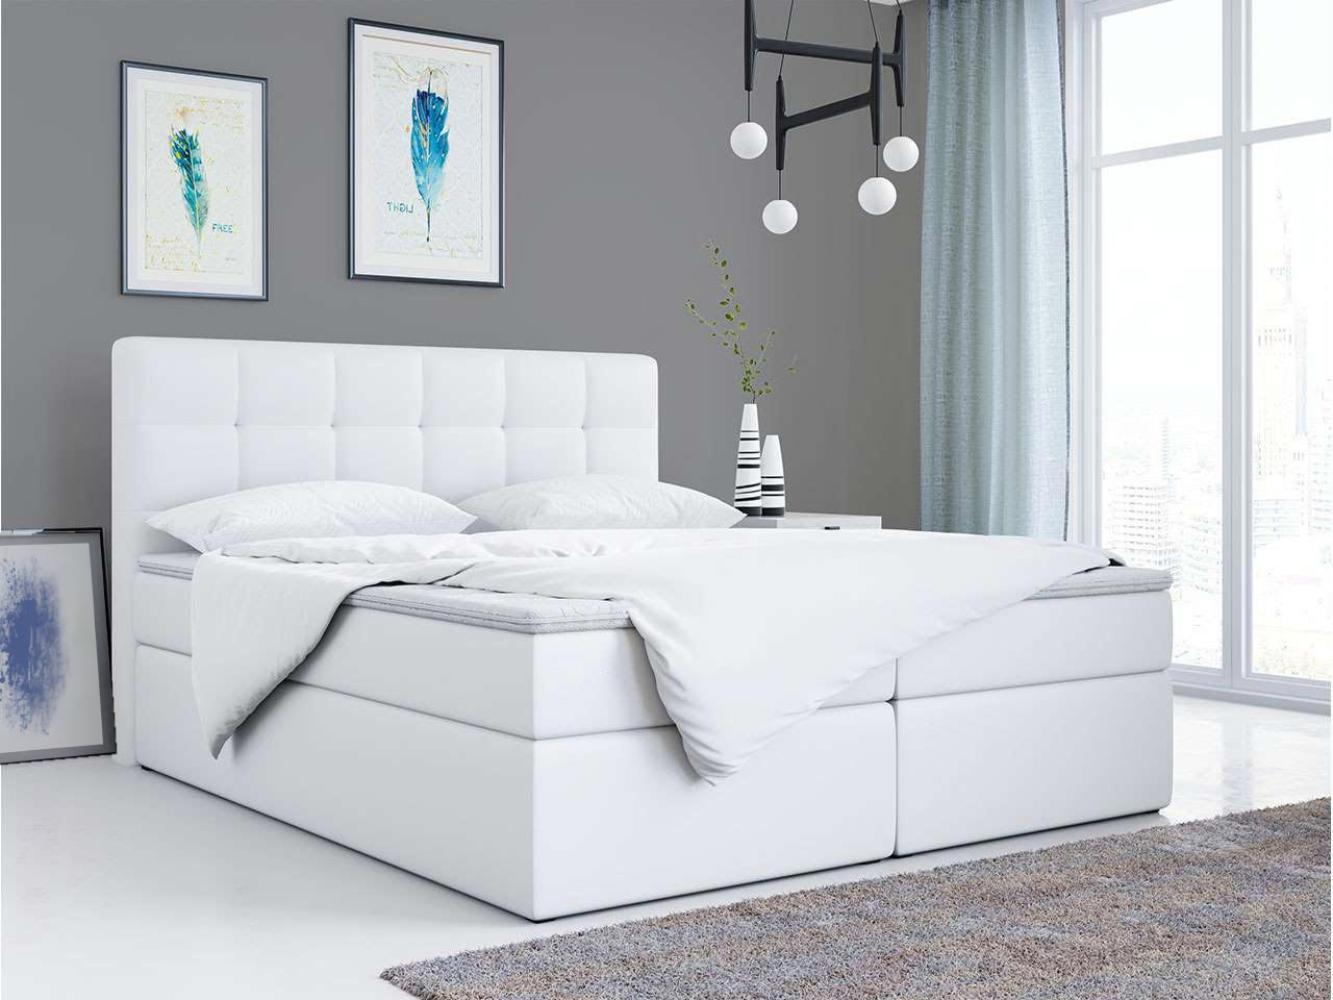 Doppelbett Polsterbett Kunstlederbett mit Bettkasten - TOP-2 - 160x200cm - Weiß Kunstleder - H4 Bild 1